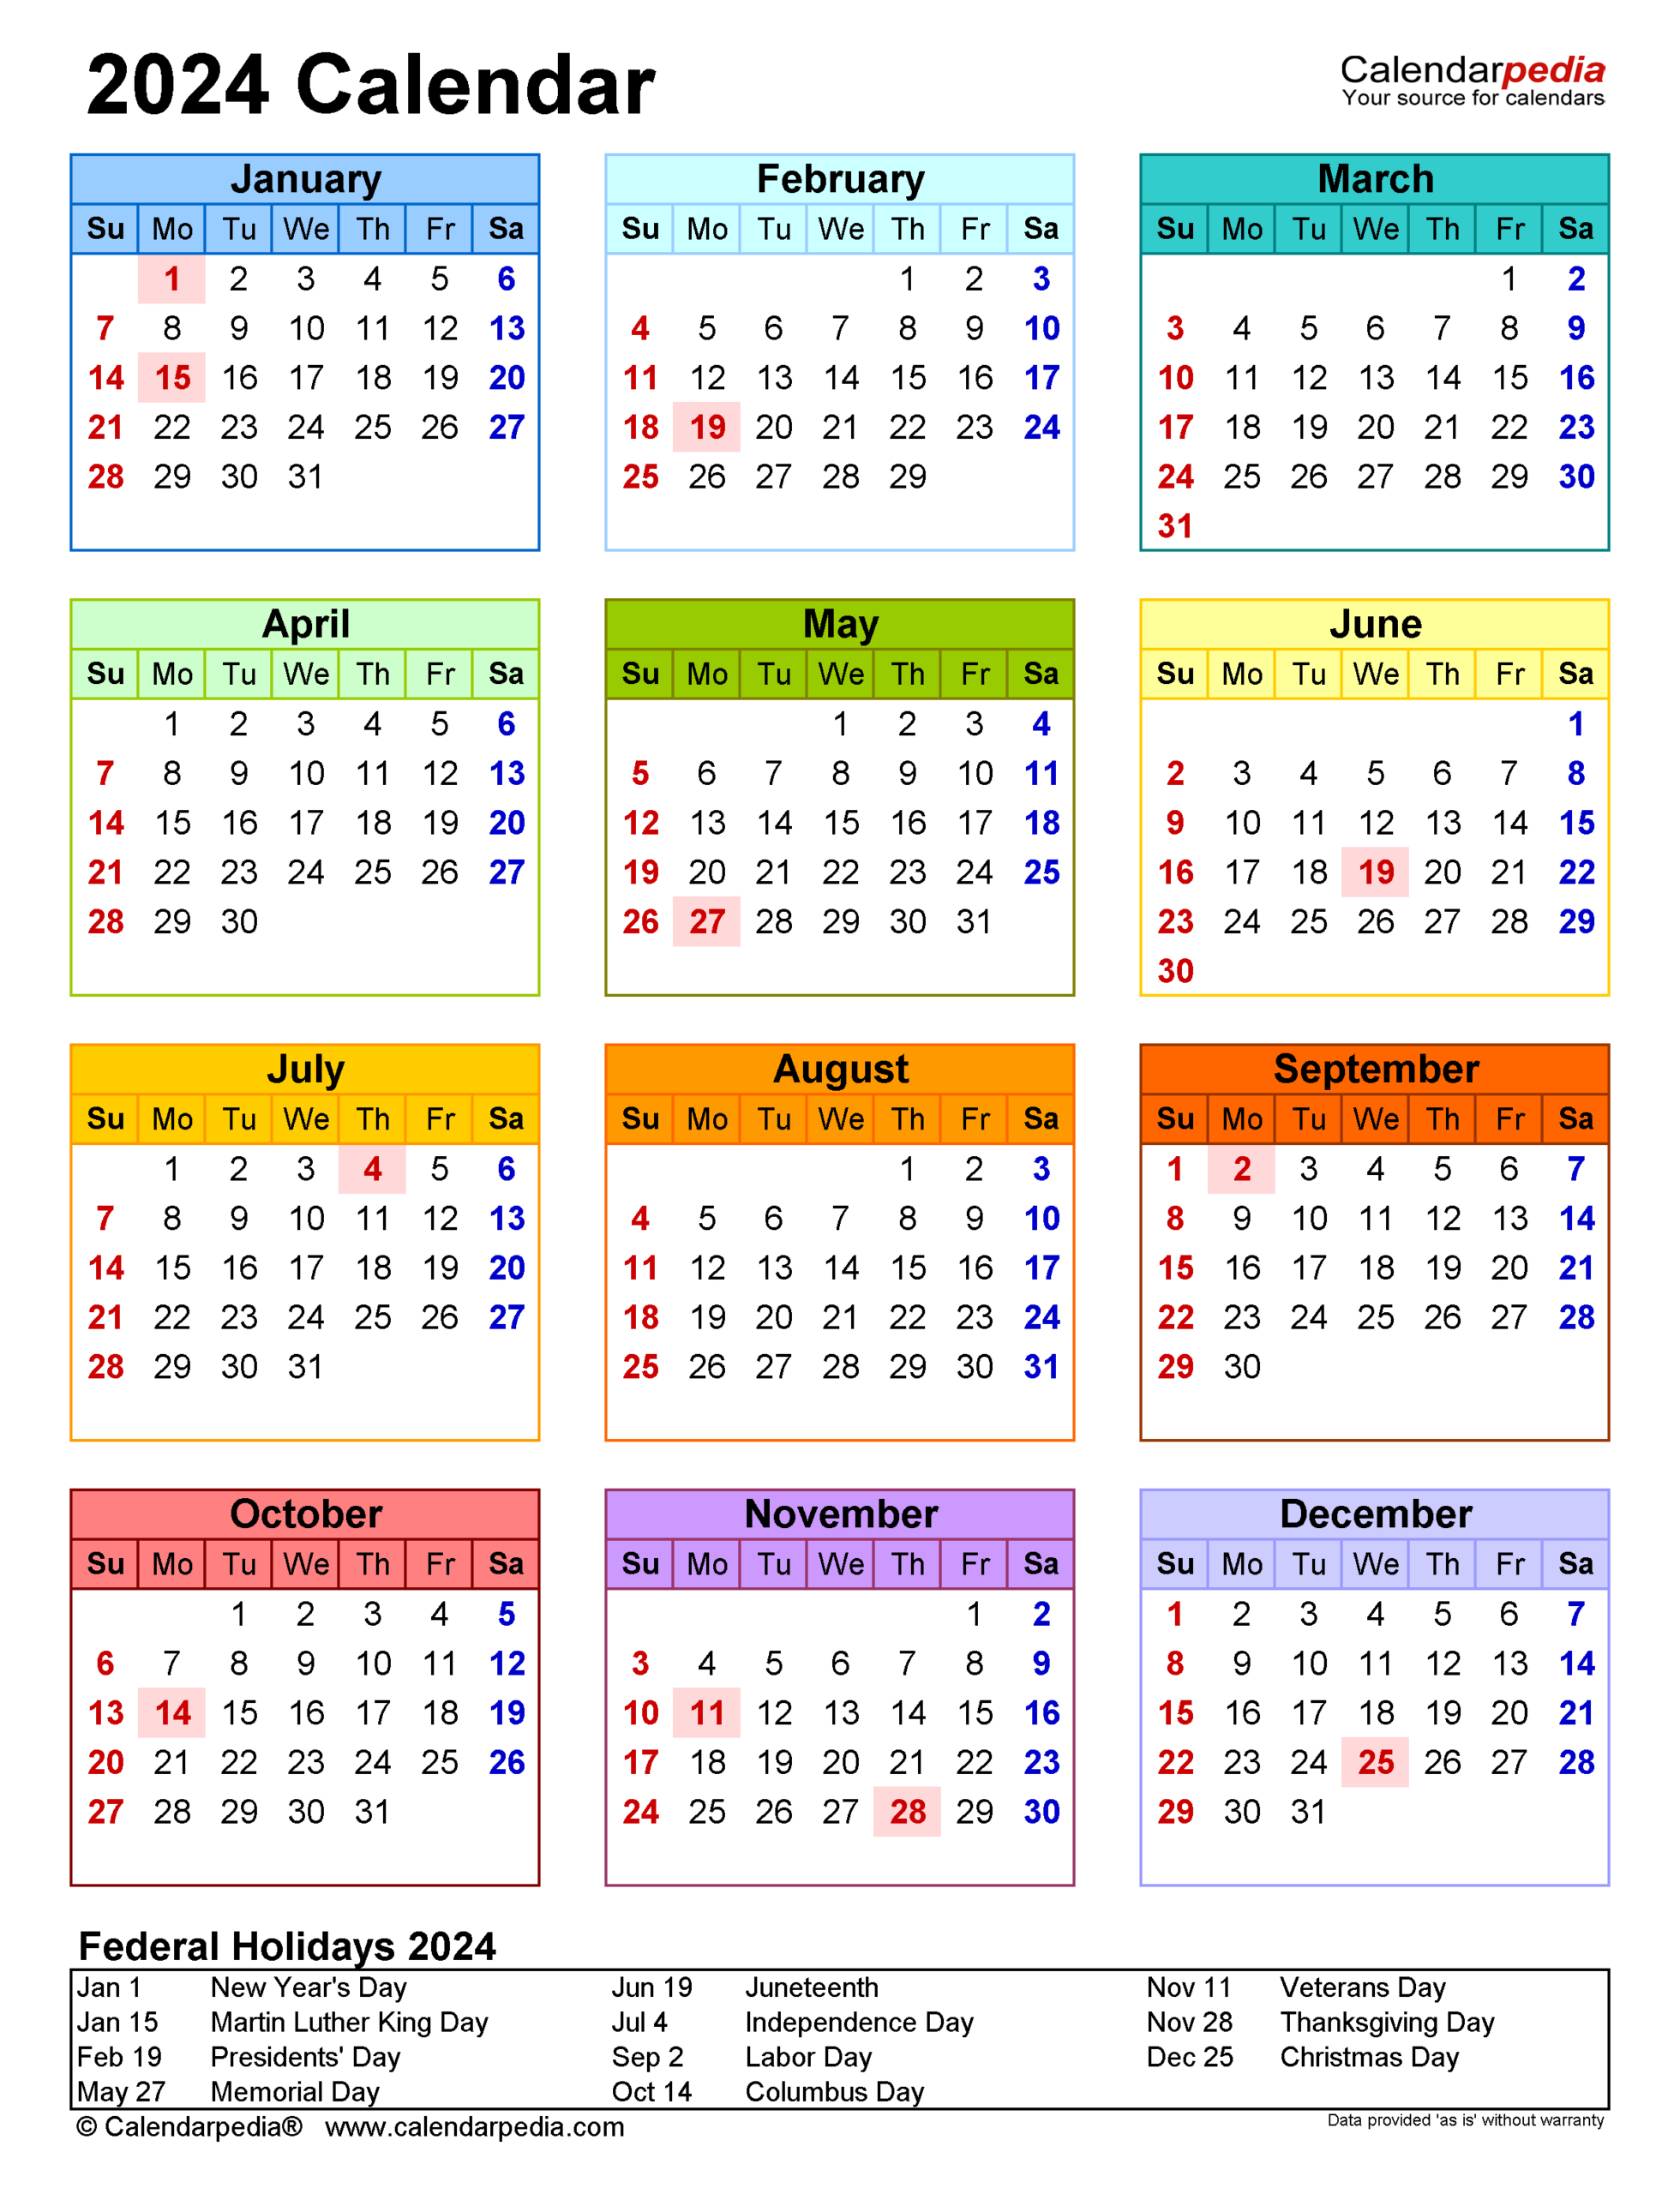 2024 Calendar - Free Printable Pdf Templates - Calendarpedia | Printable Calendar 2024 Calendarpedia